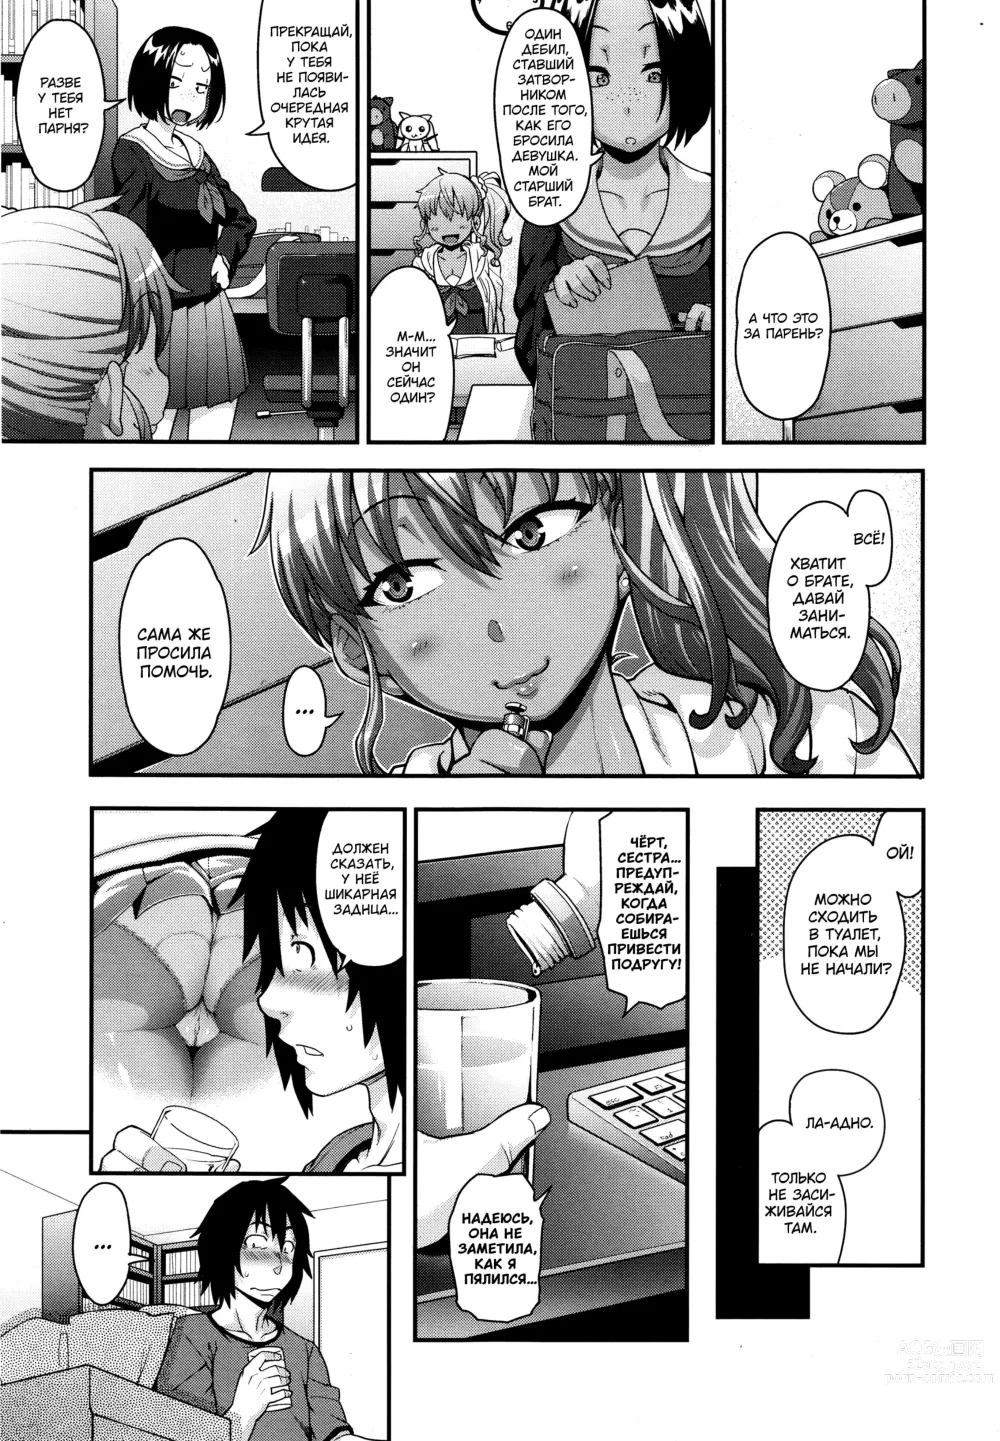 Page 3 of manga FEEL SO ASS: Это была судьба